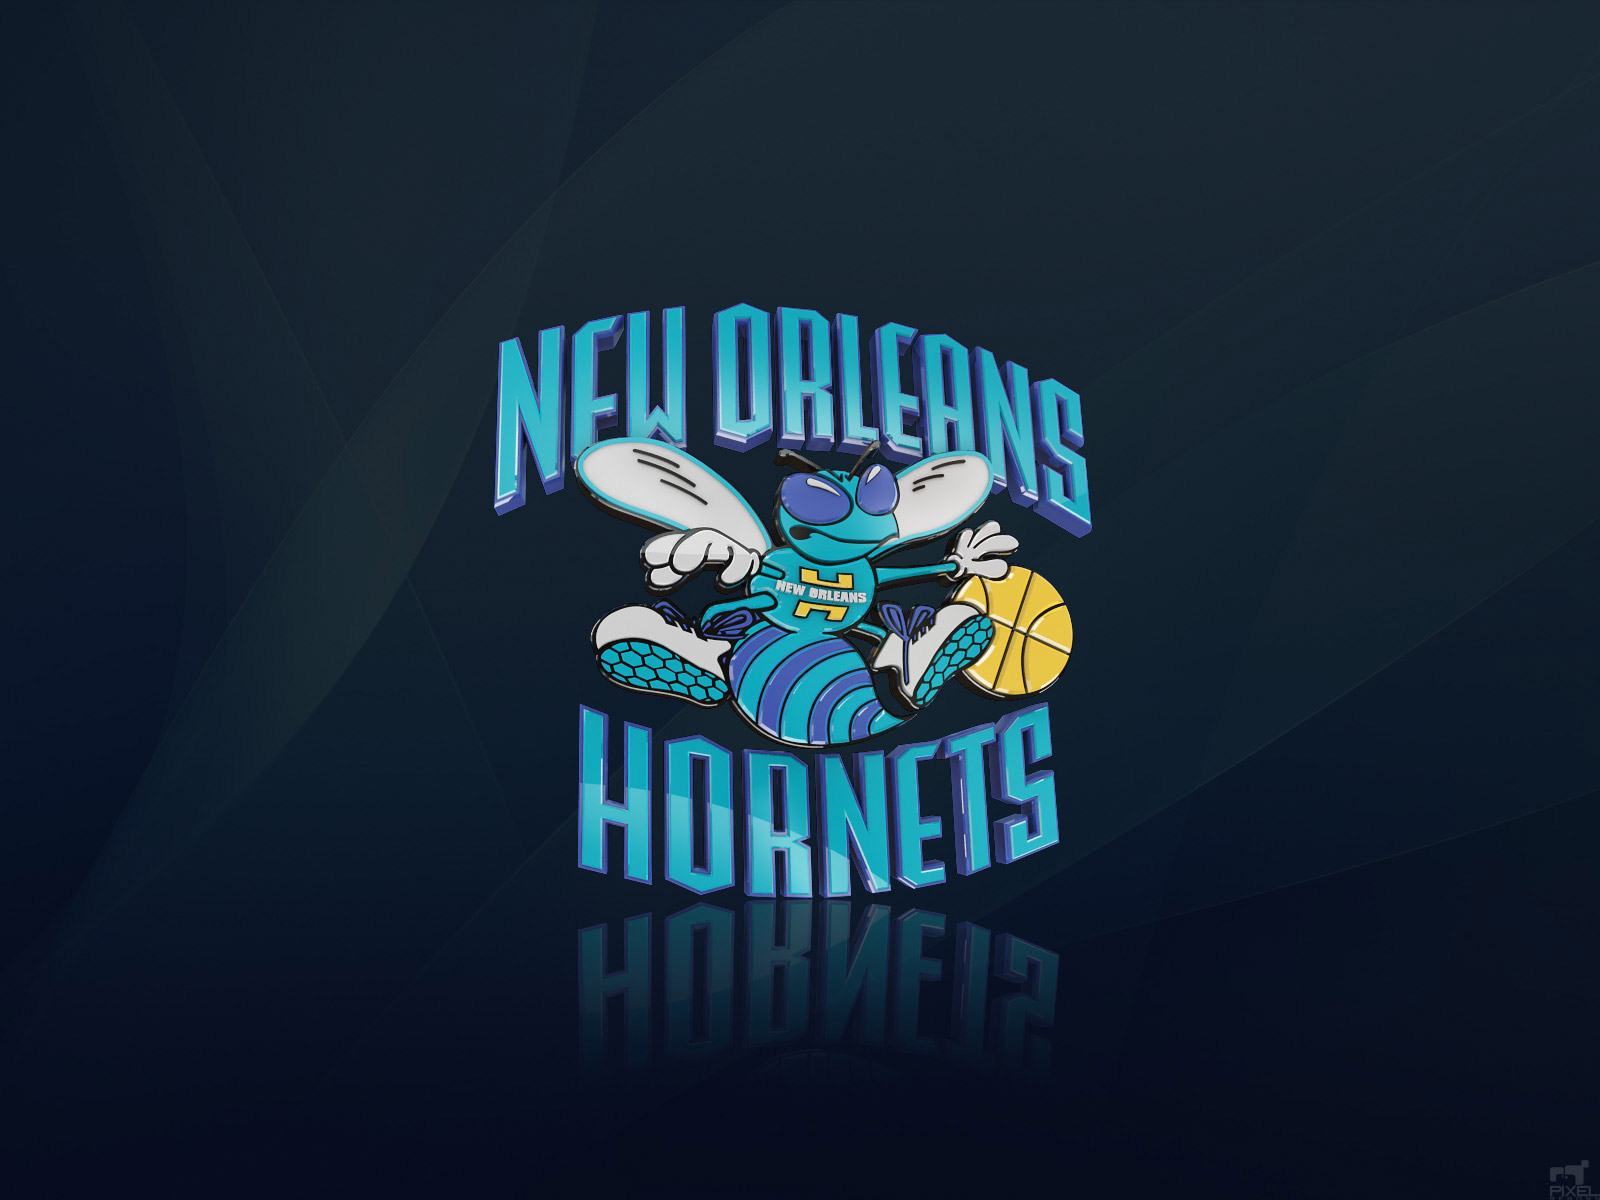 Background wallpaper, basketball, NBA new orleans hornets